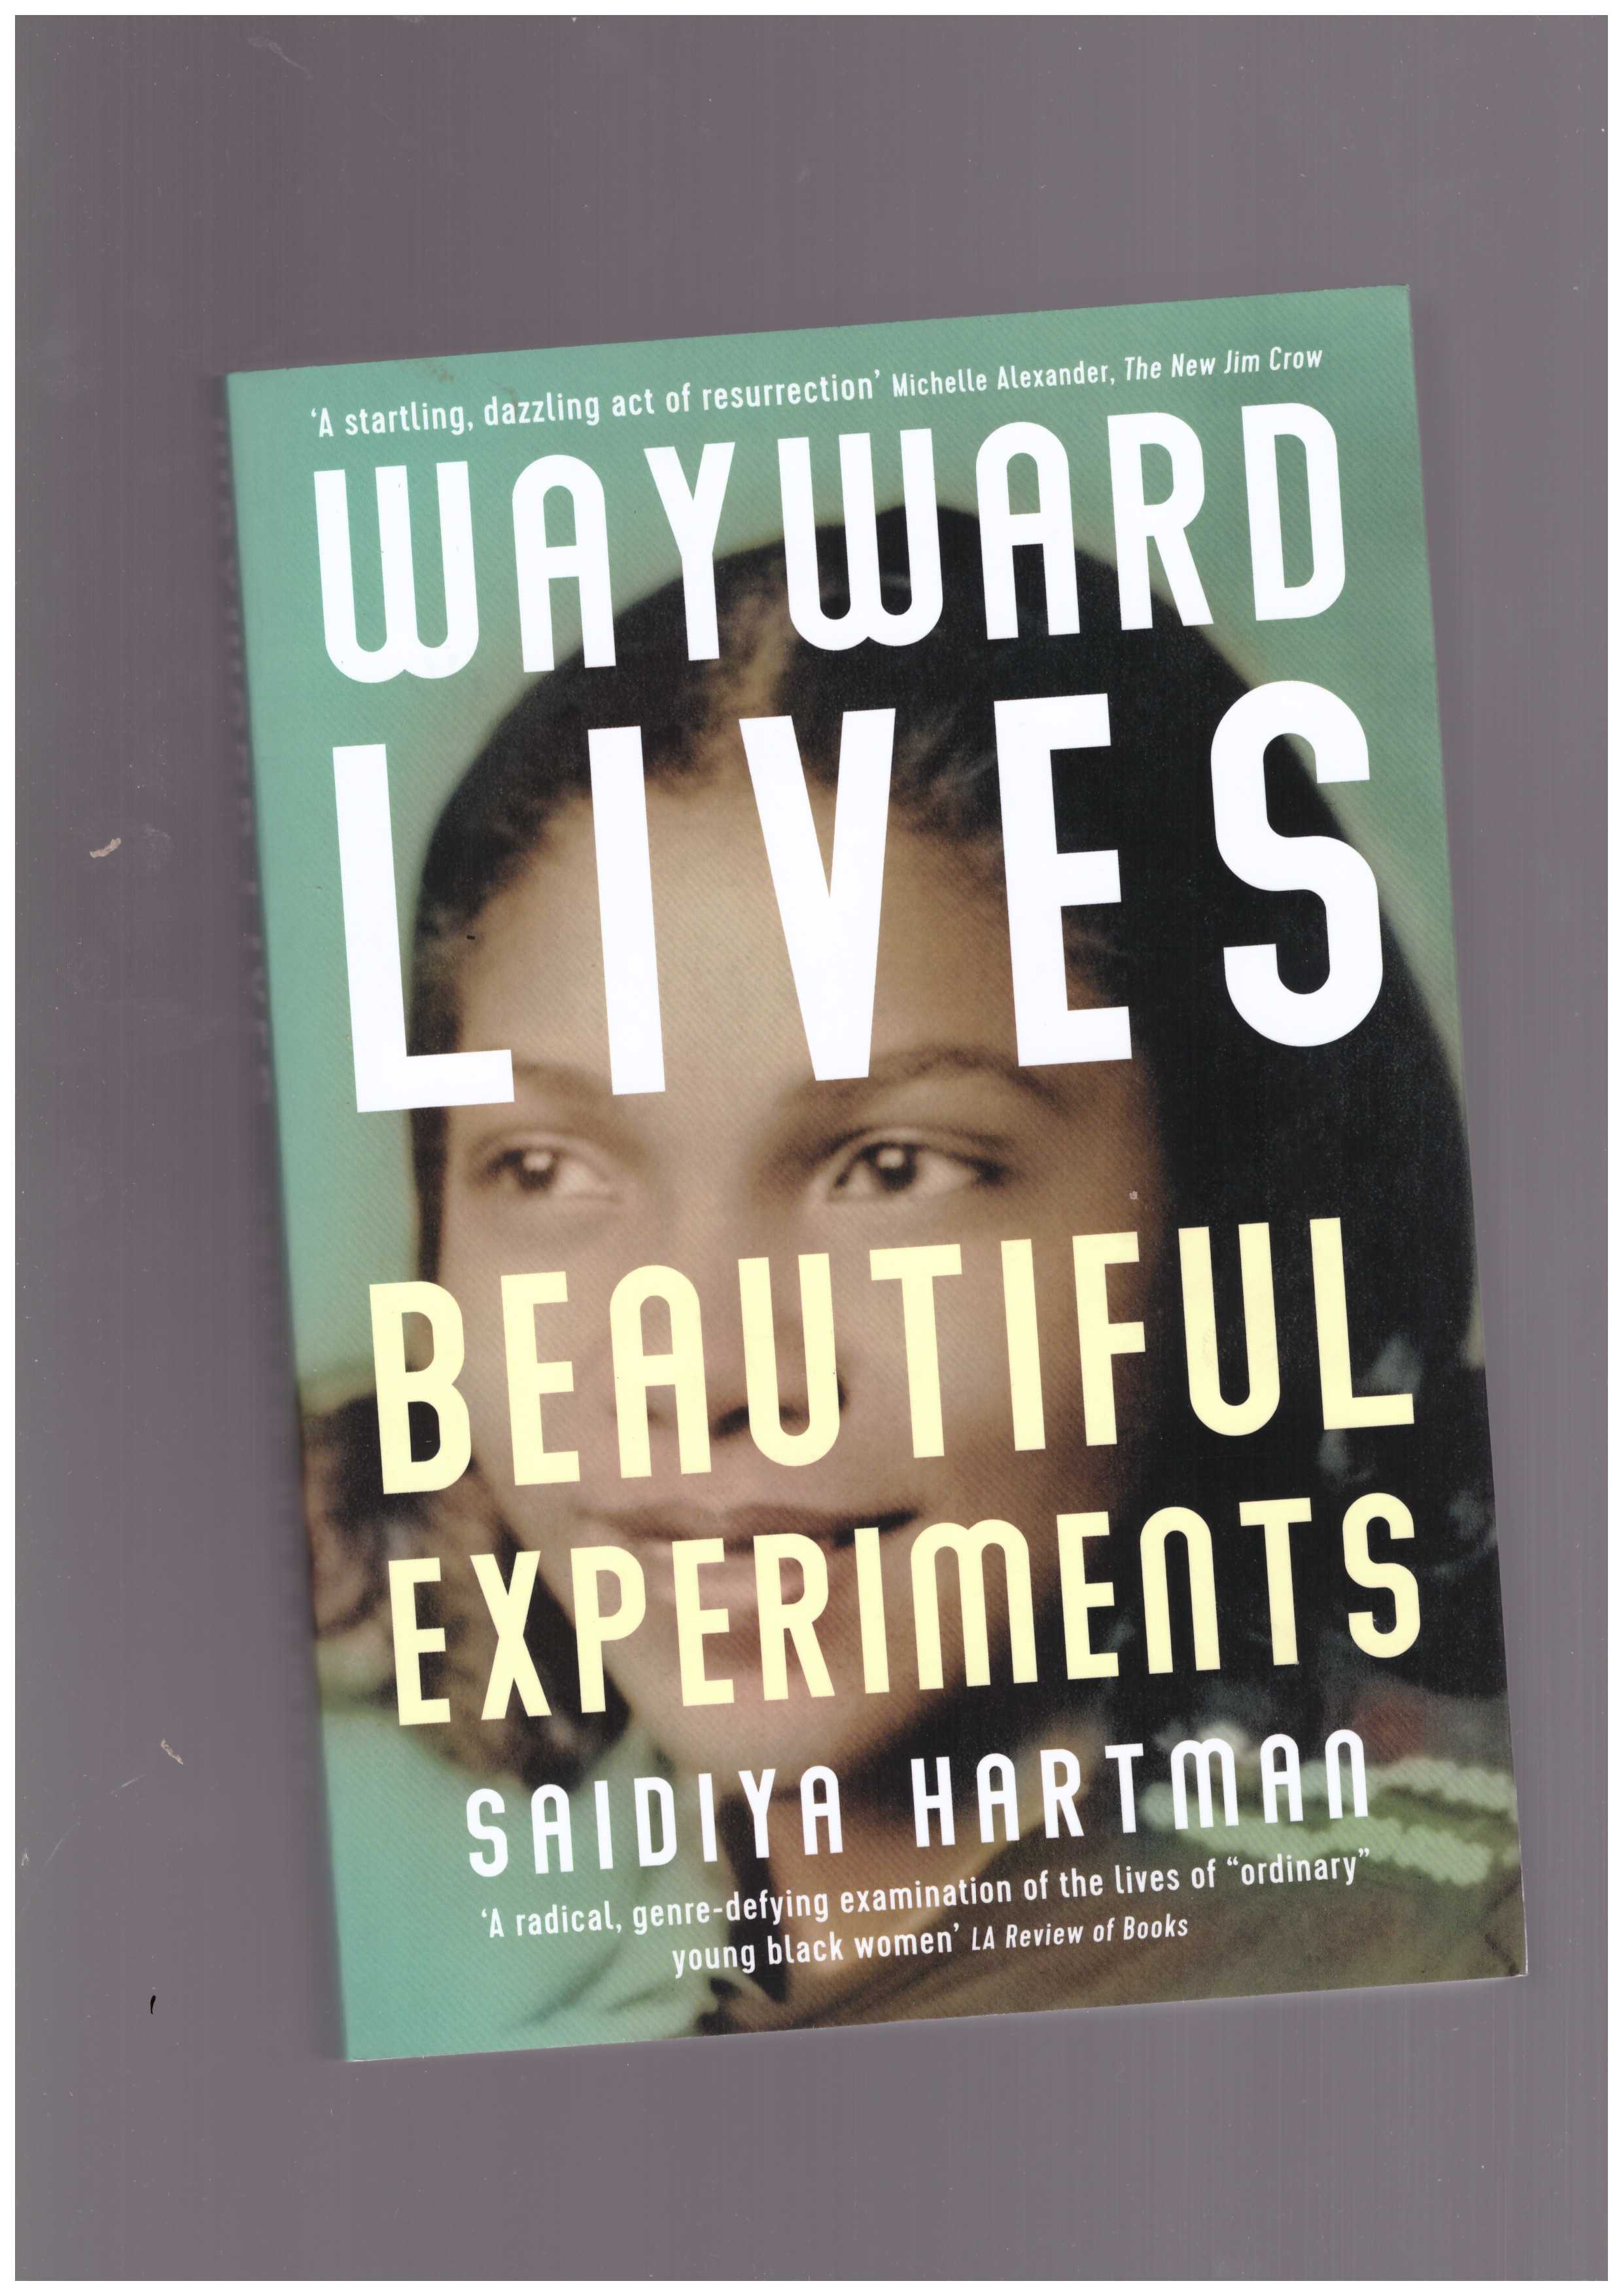 wayward lives beautiful experiments sparknotes